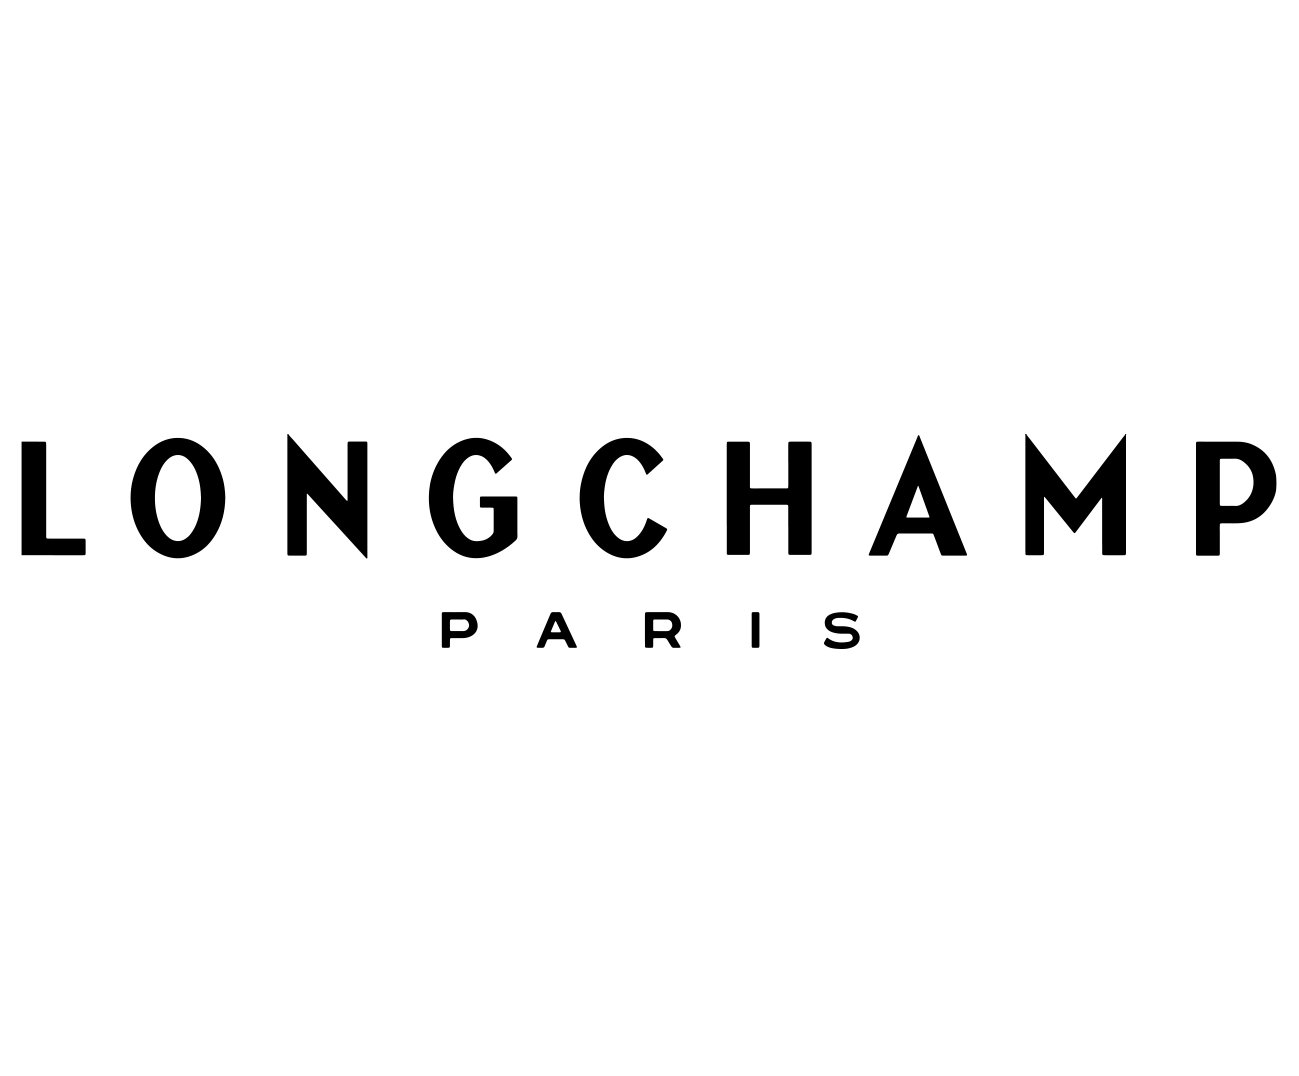 Longchamp Paris Logo